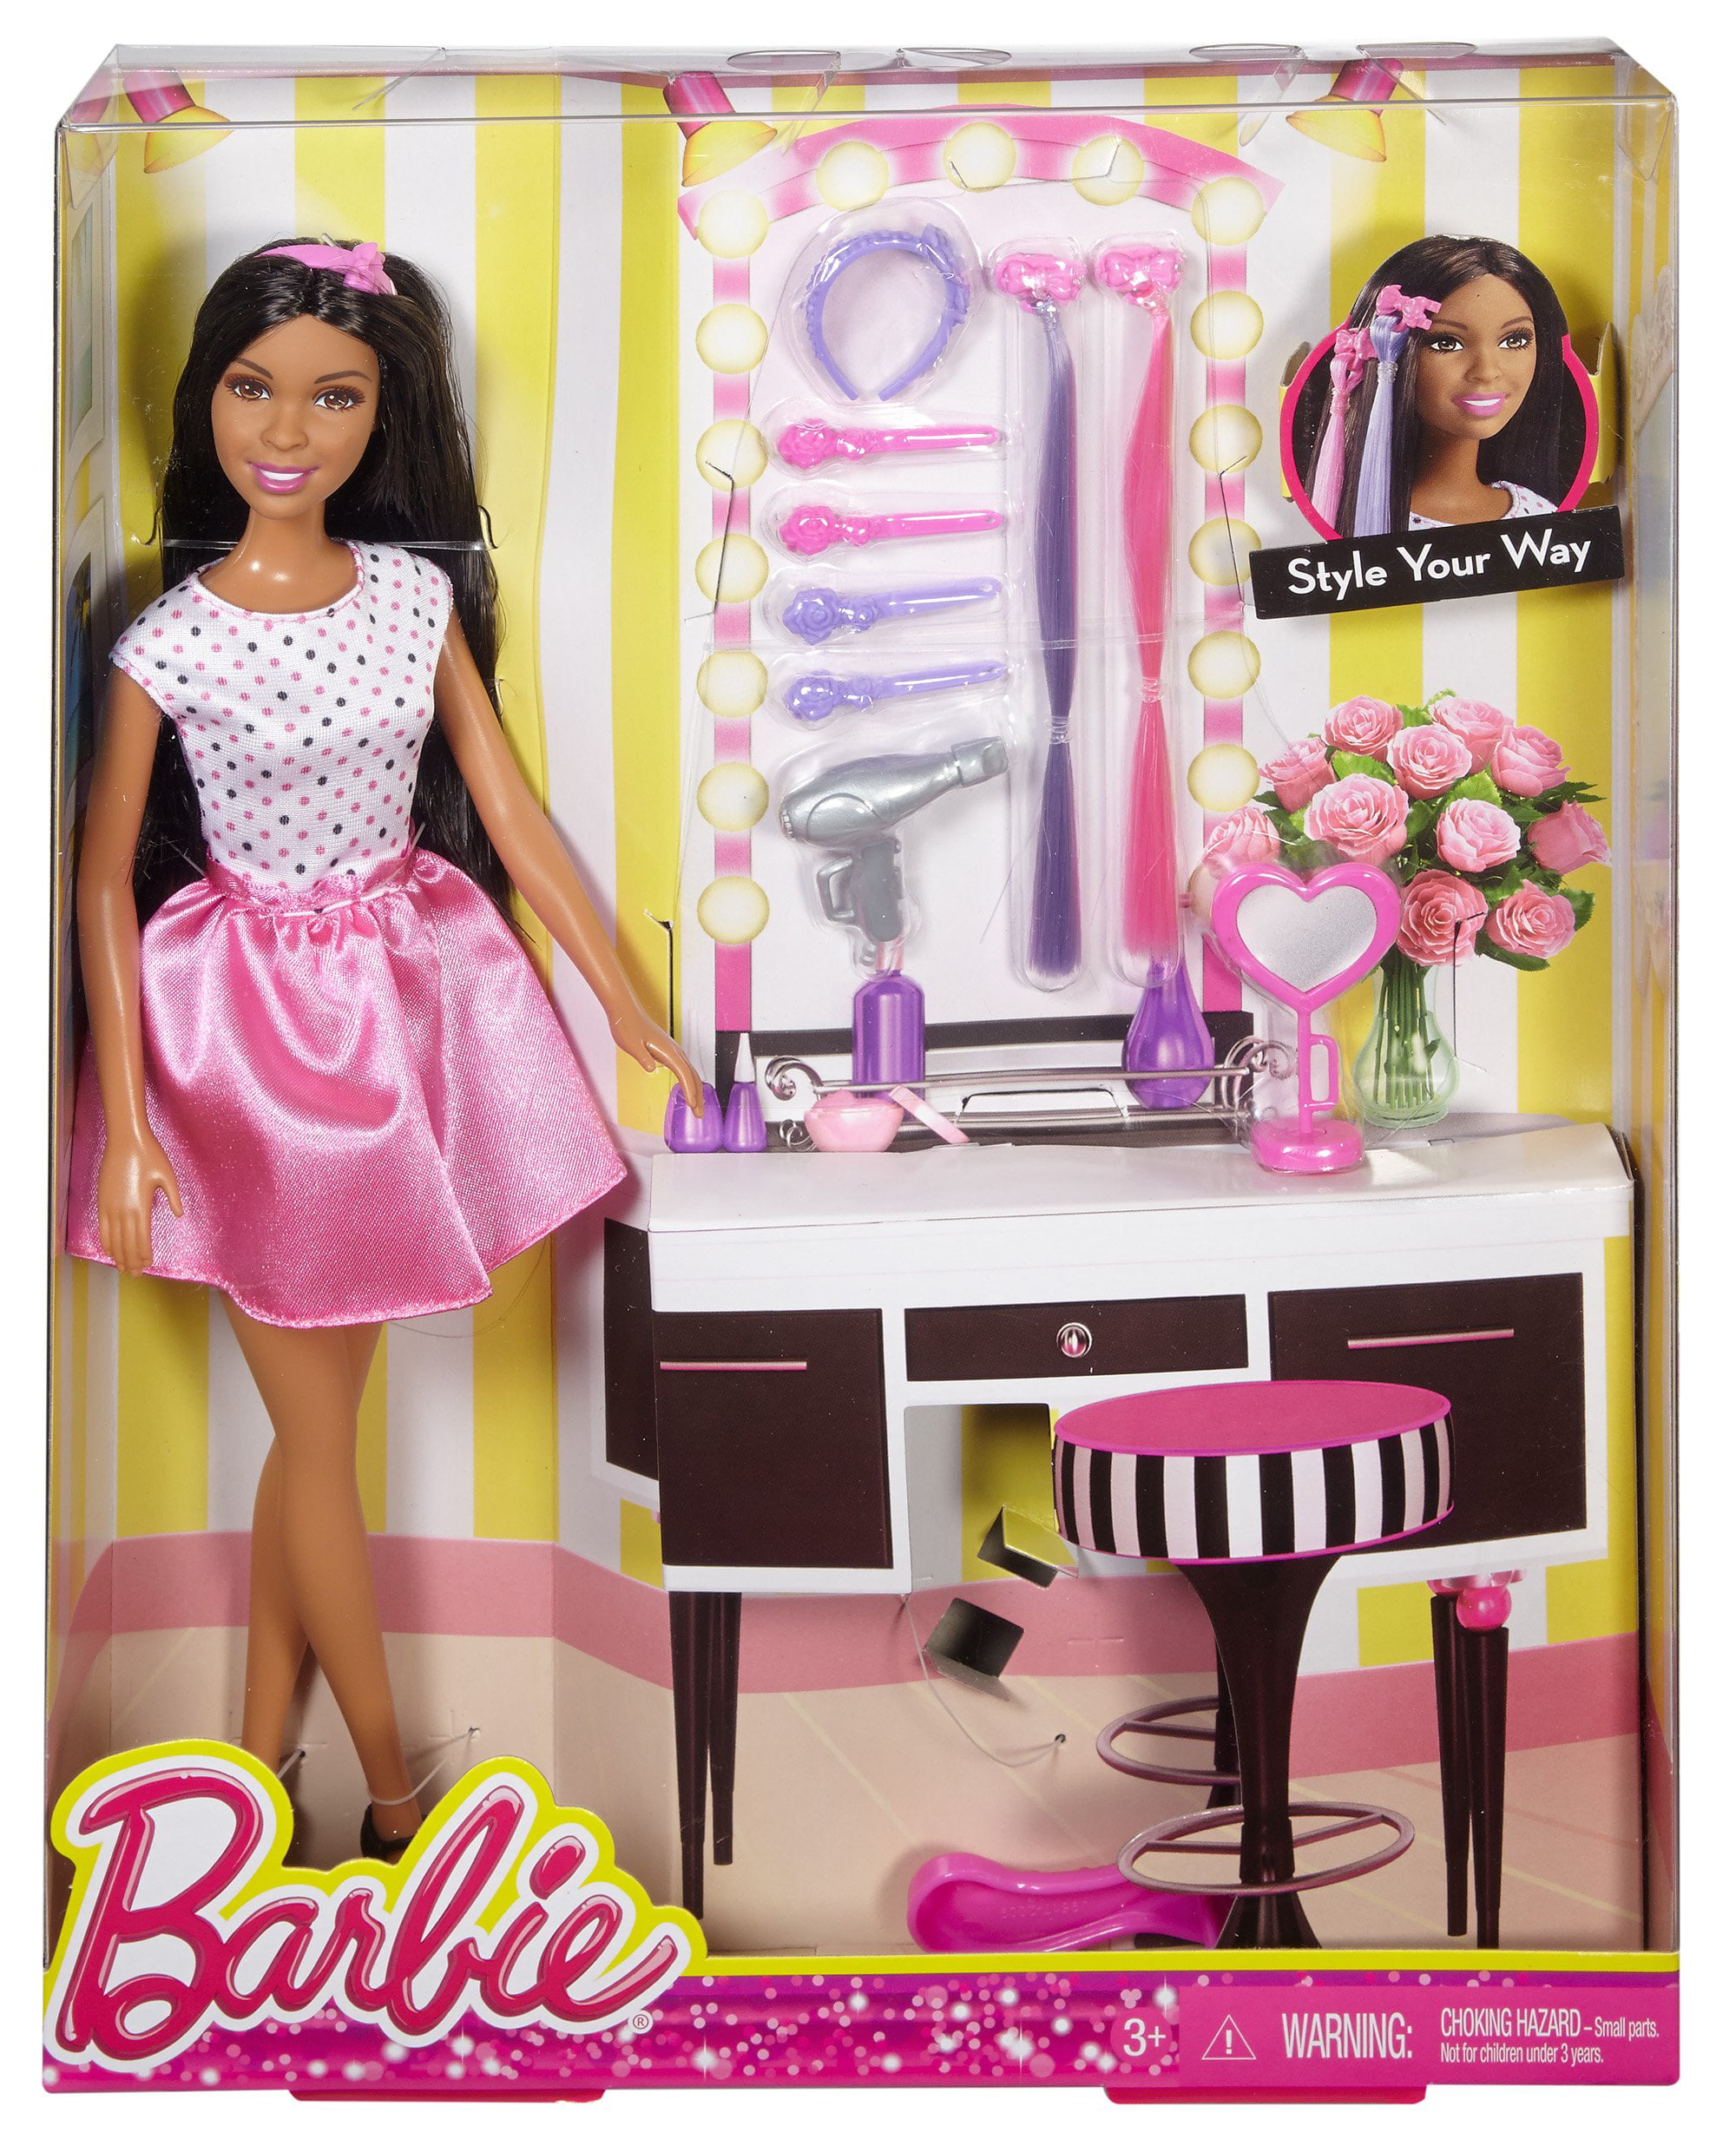 Barbie African American Doll With Braids Set Of Hearts au meilleur prix sur